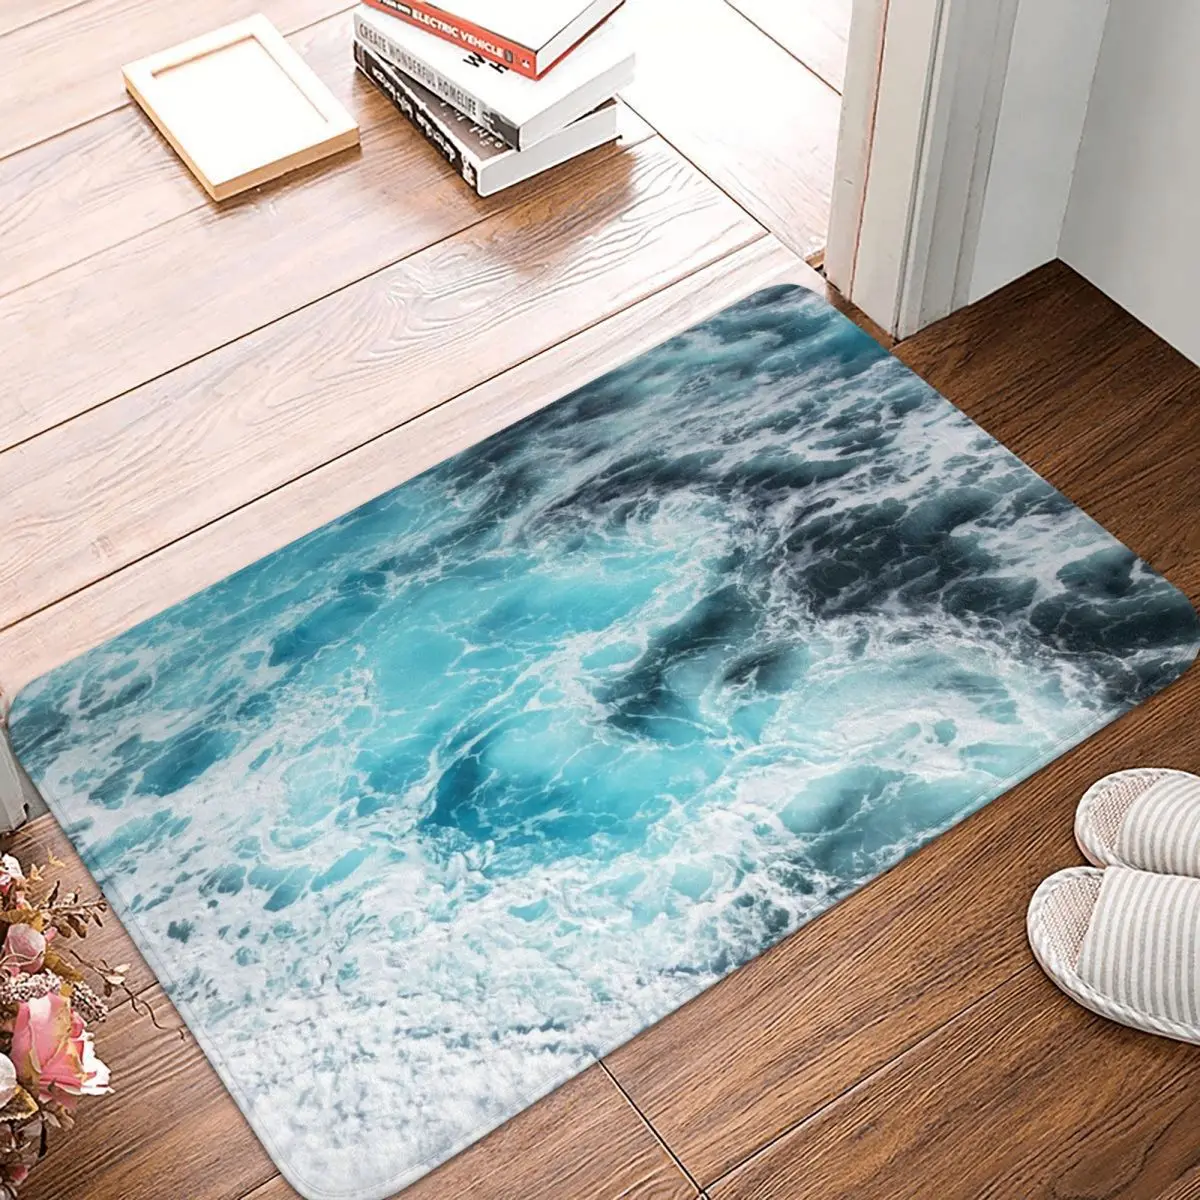 

Mesmerizing Blue Ocean Waves Doormat Carpet Mat Rug Polyester PVC Non-Slip Floor Decor Bath Bathroom Kitchen Living Room 40*60